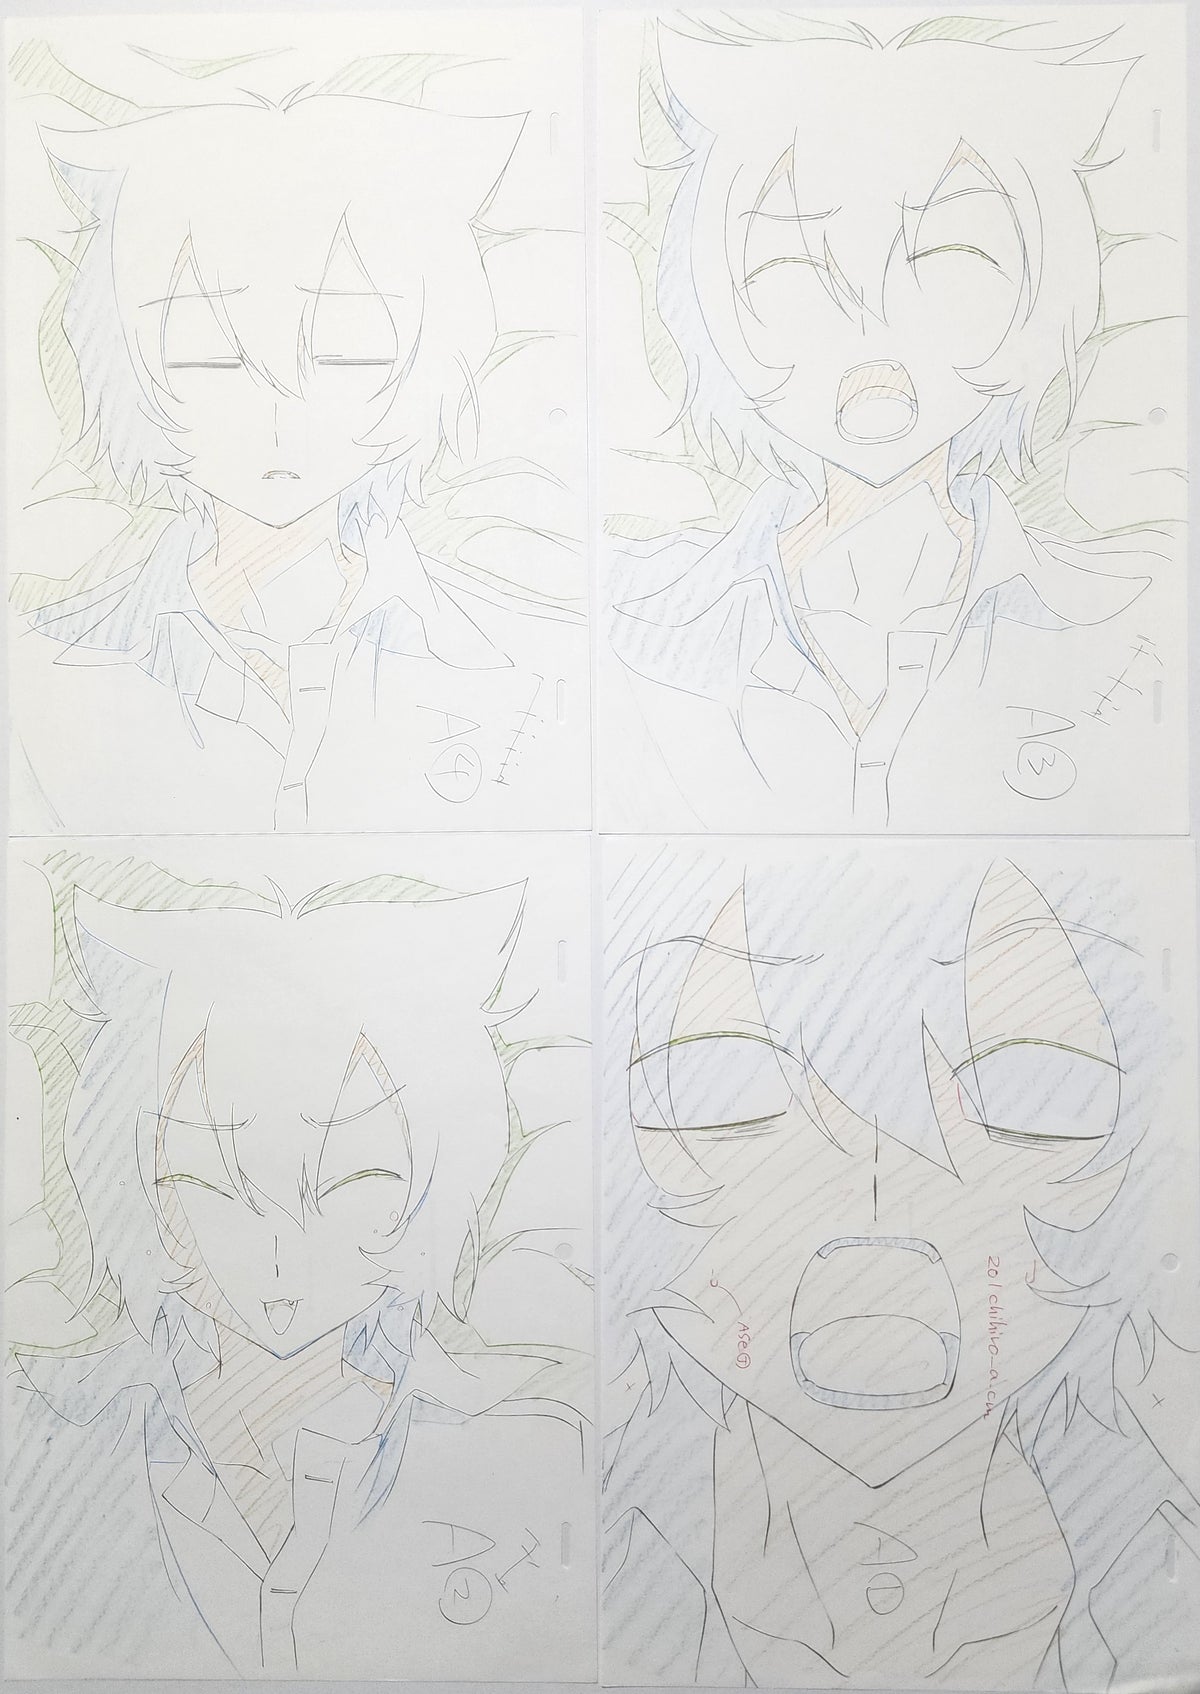 Sankarea Animation Production Cel Drawing Anime: 8 Sheets - 4372